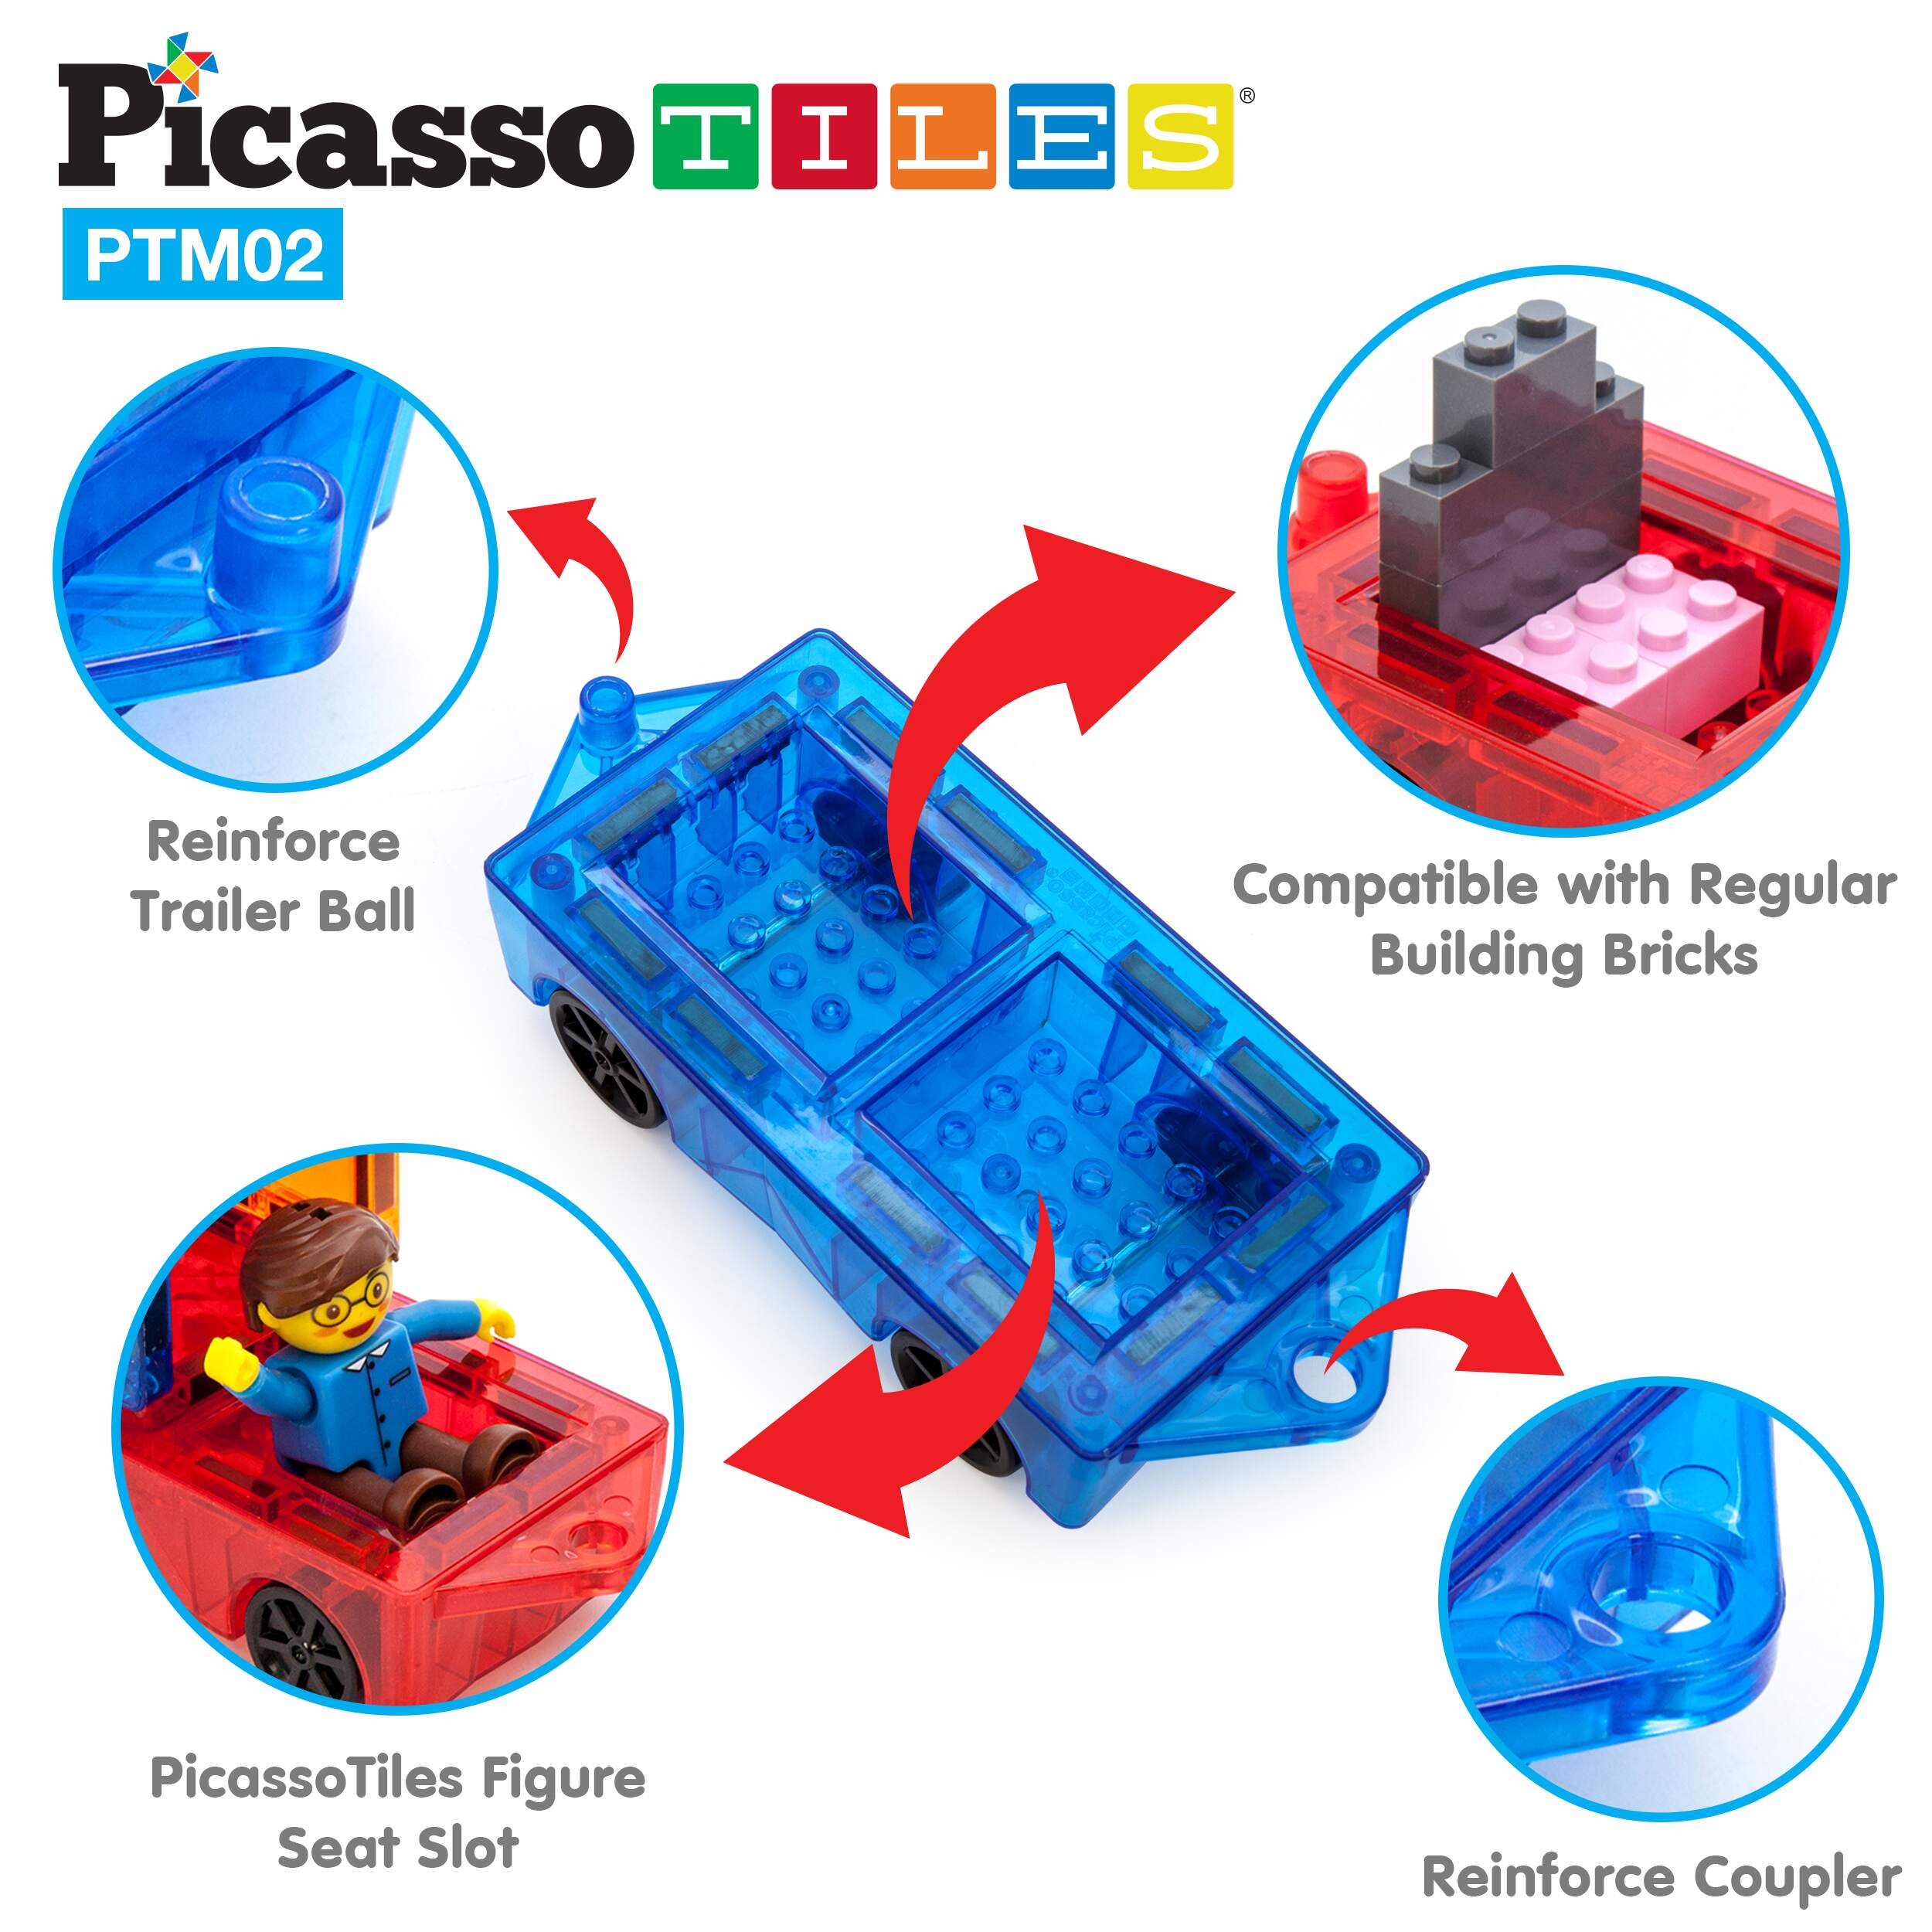 PicassoTiles Mini Car Truck 2pc Set